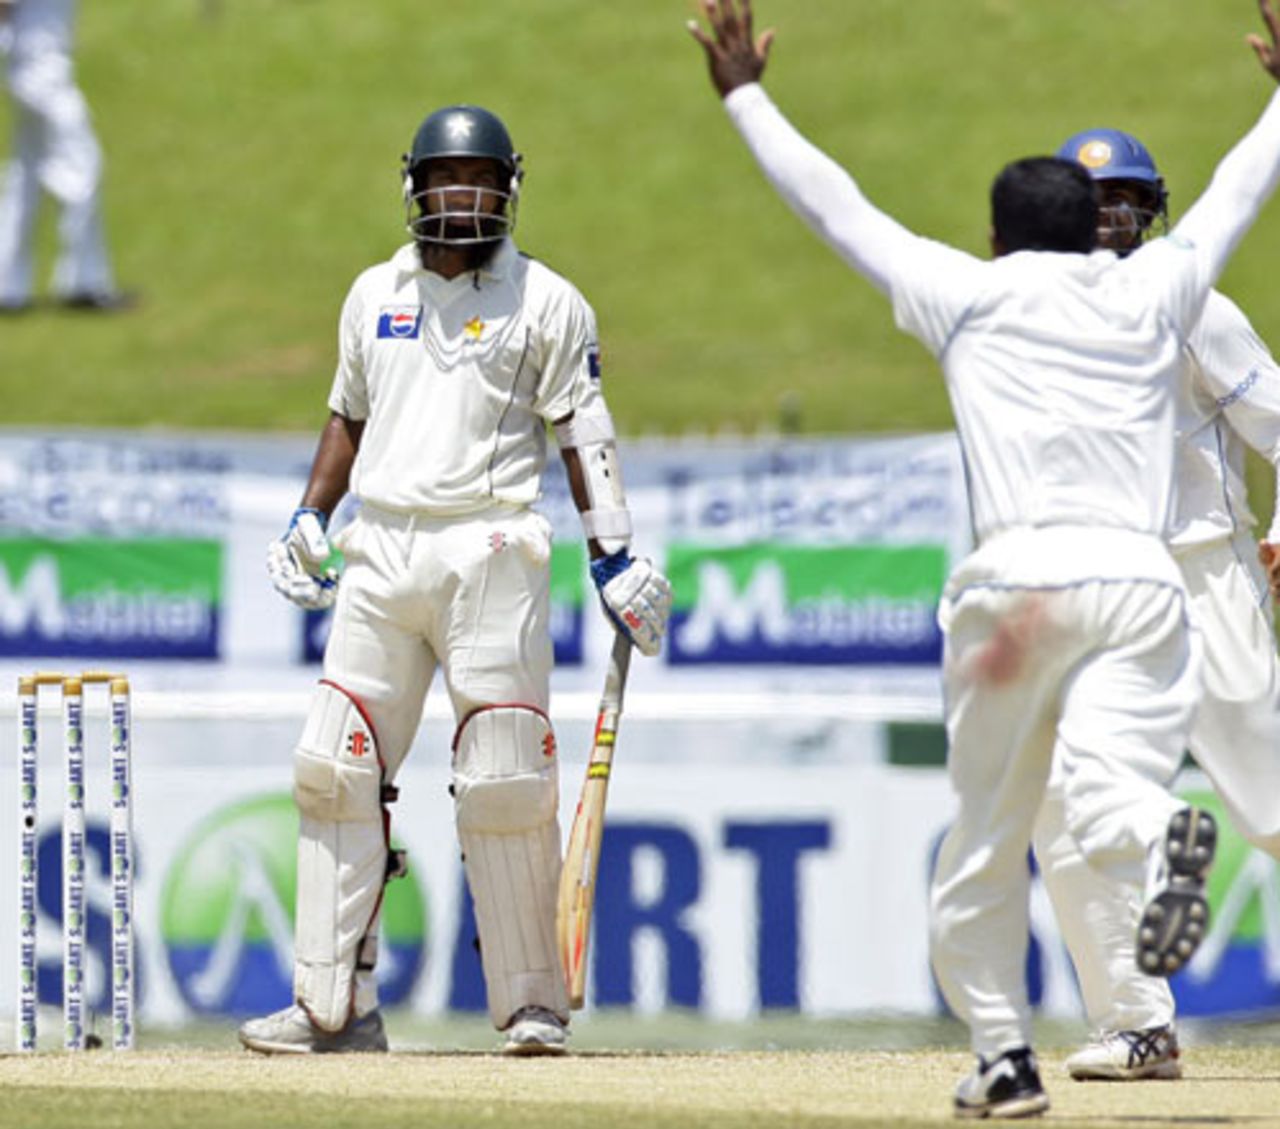 Rangana Herath celebrates dismissing Mohammad Yousuf, Sri Lanka v Pakistan, 3rd Test, Colombo, 3rd day, July 22, 2009